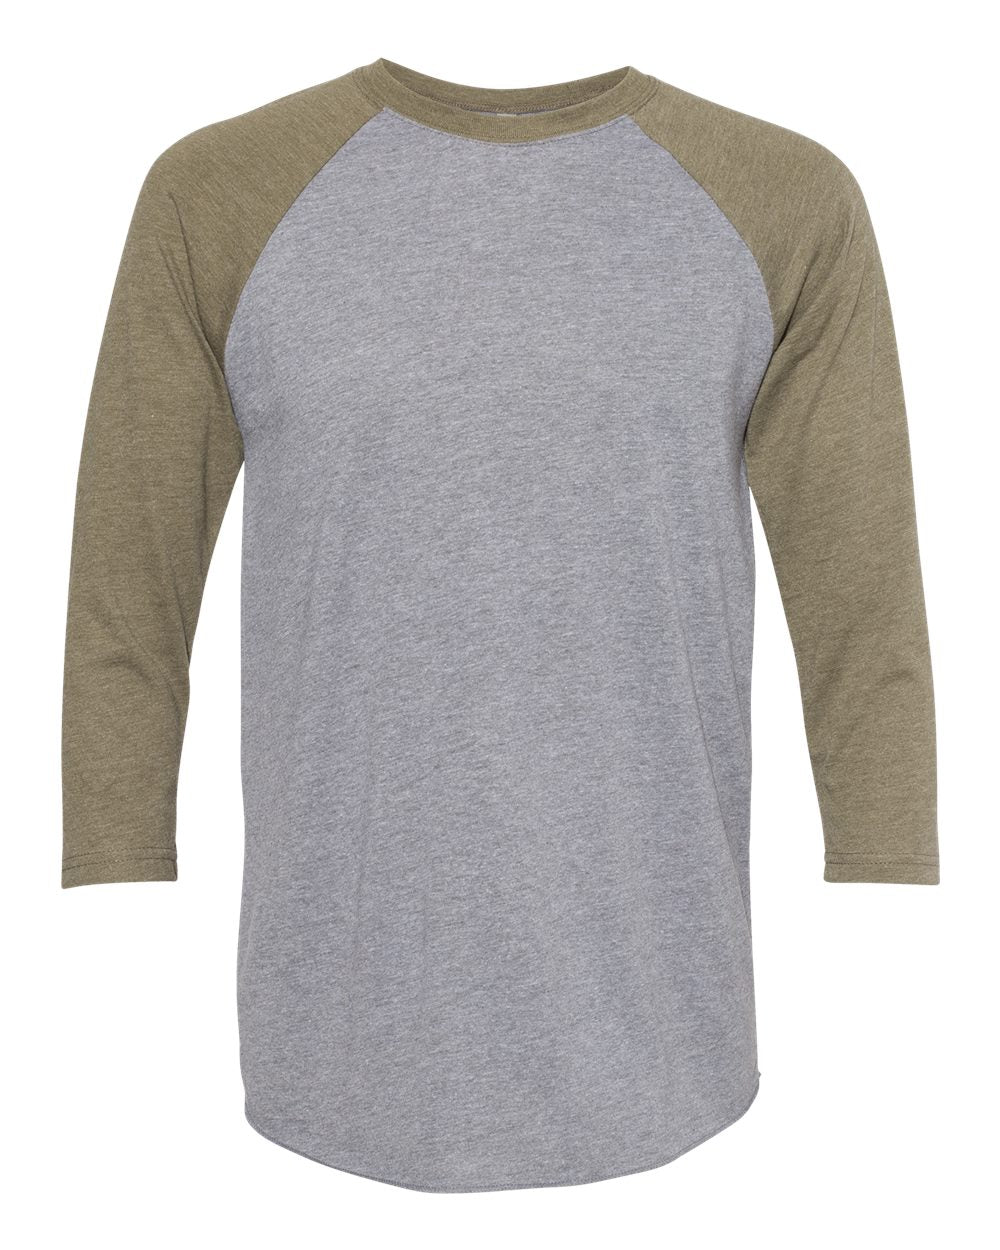 Unisex Tri-Blend 3/4-Sleeve Raglan T-Shirt - DSP On Demand